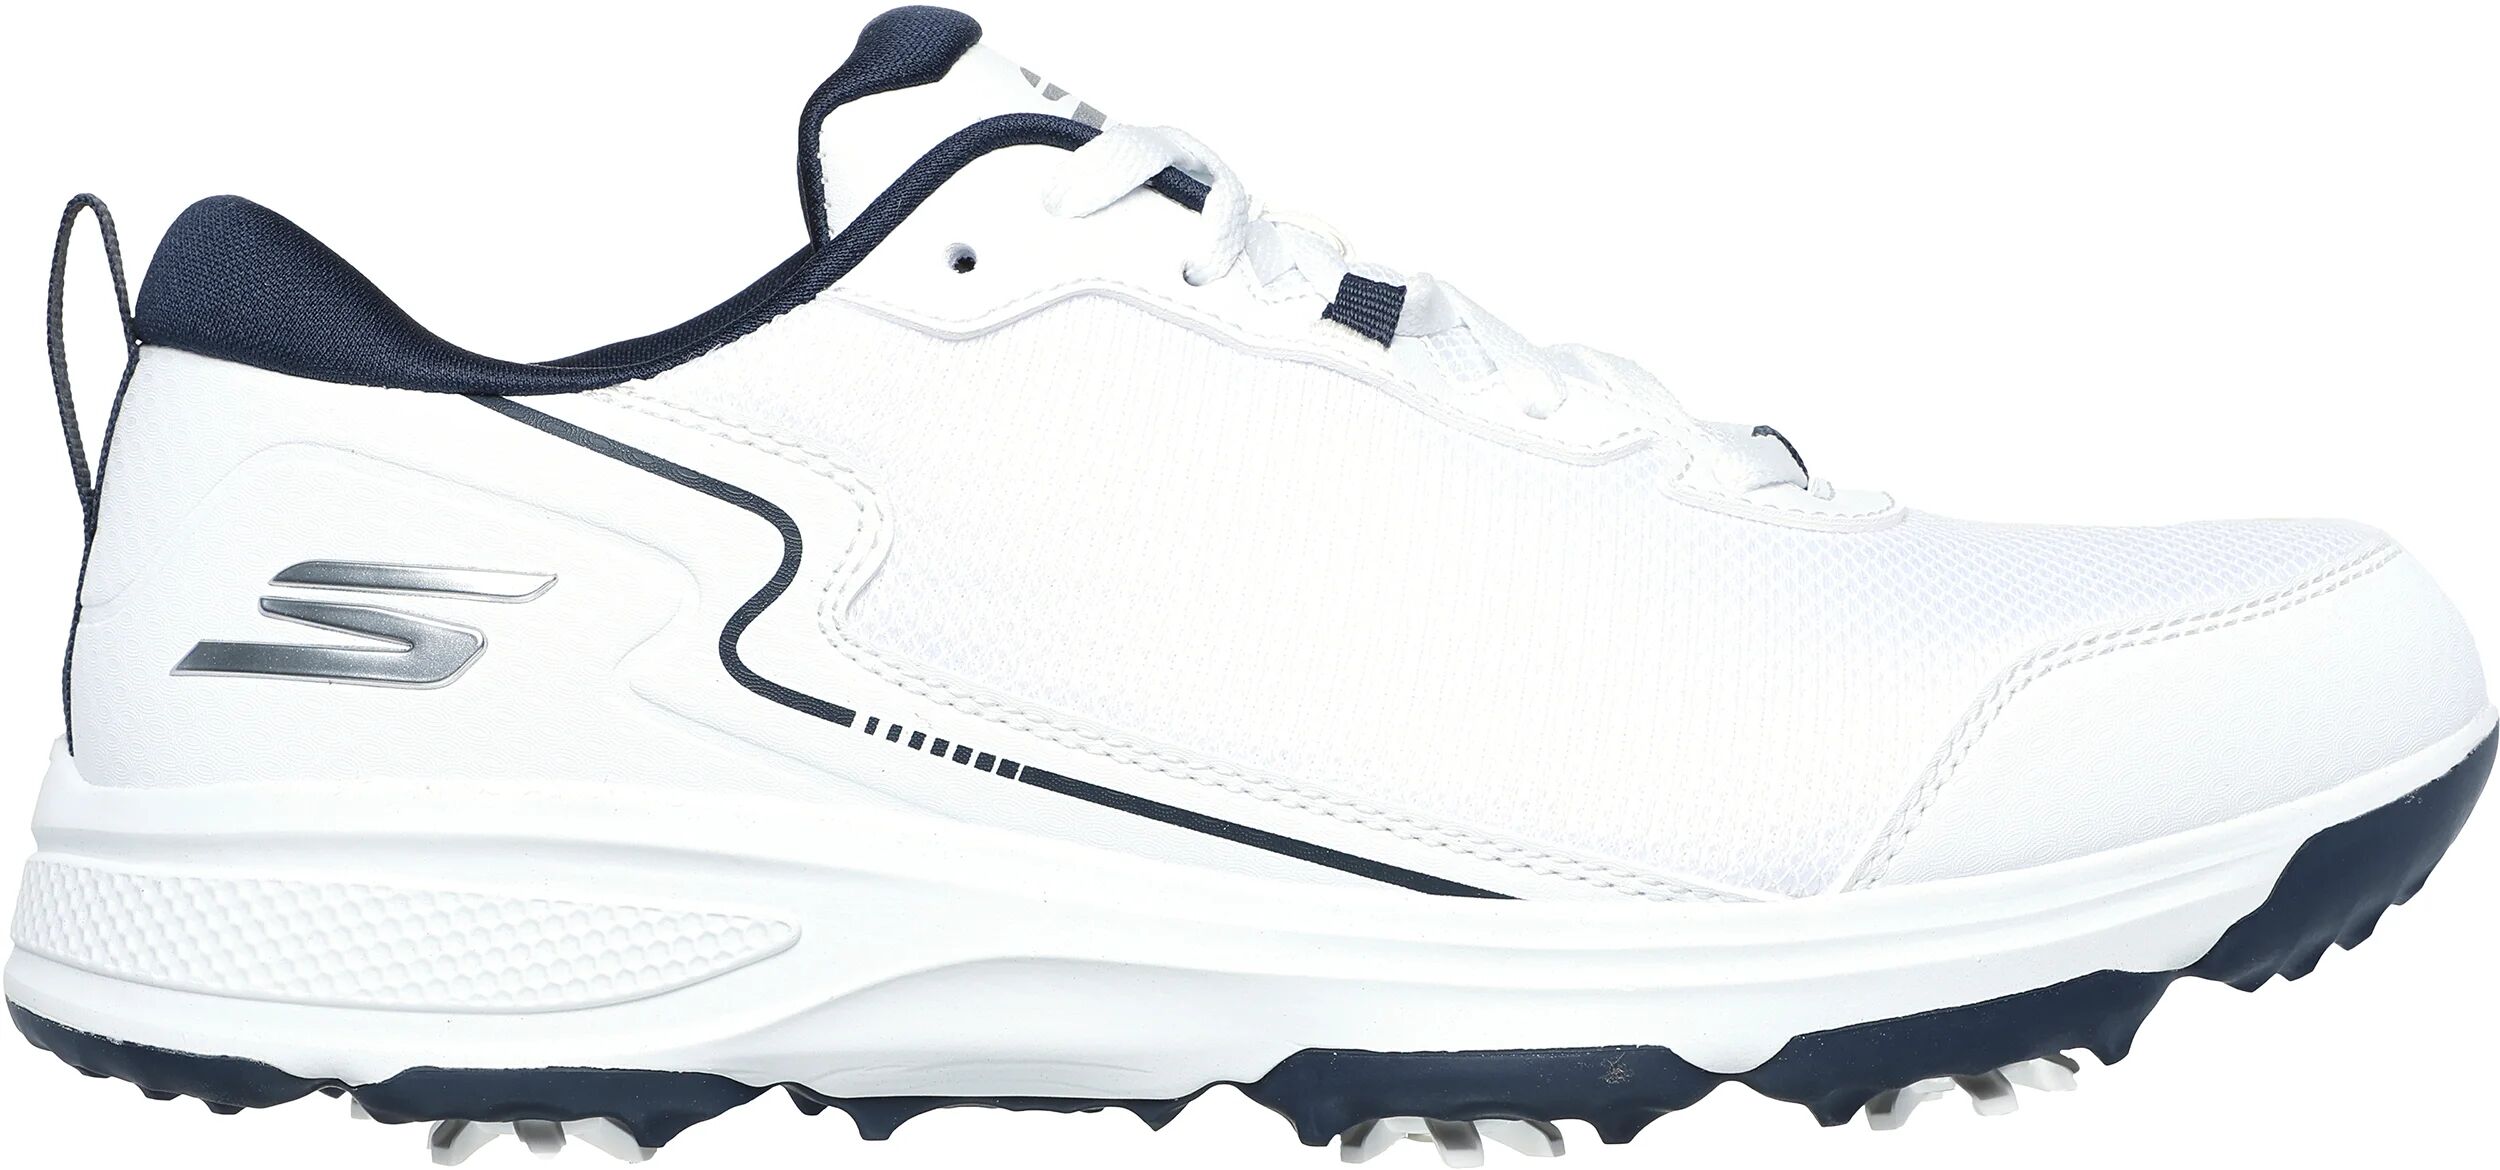 Skechers GO GOLF Torque Sport 2 Golf Shoes - White/Navy - 11.5 - MEDIUM